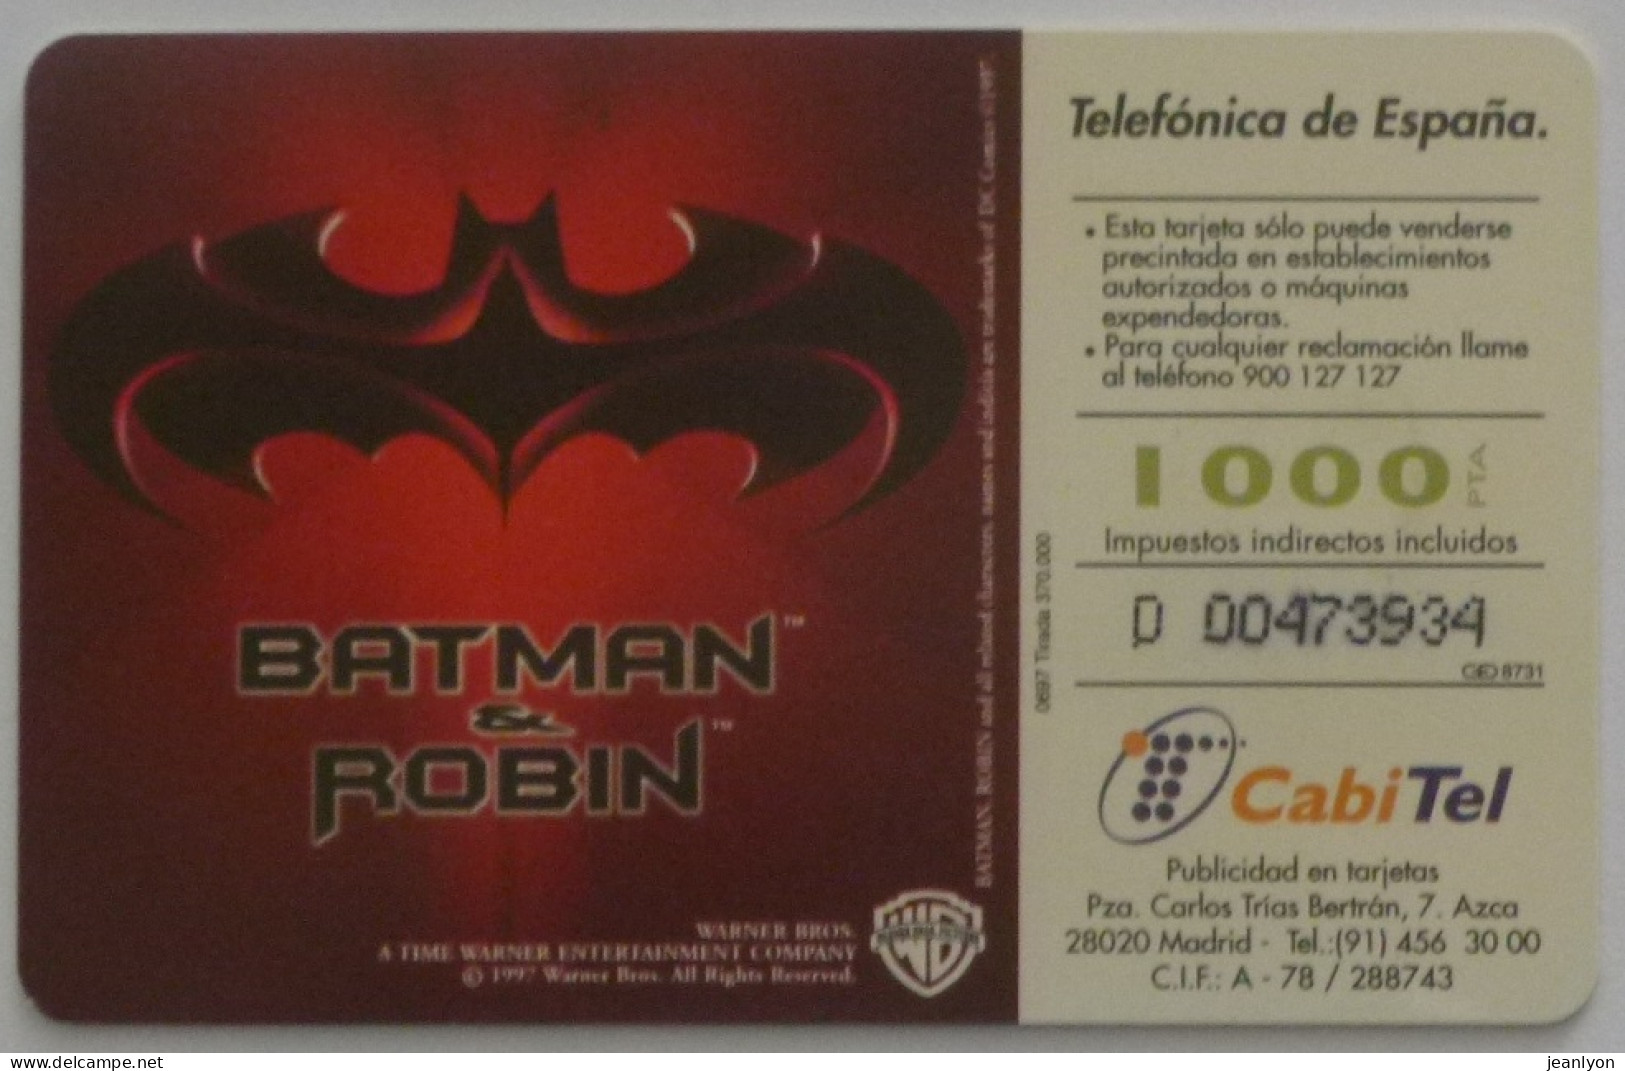 CINEMA - BATMAN ET ROBIN - Film Warner Bros - Carte Téléphone Espagne 1000 Utilisée - Cinema